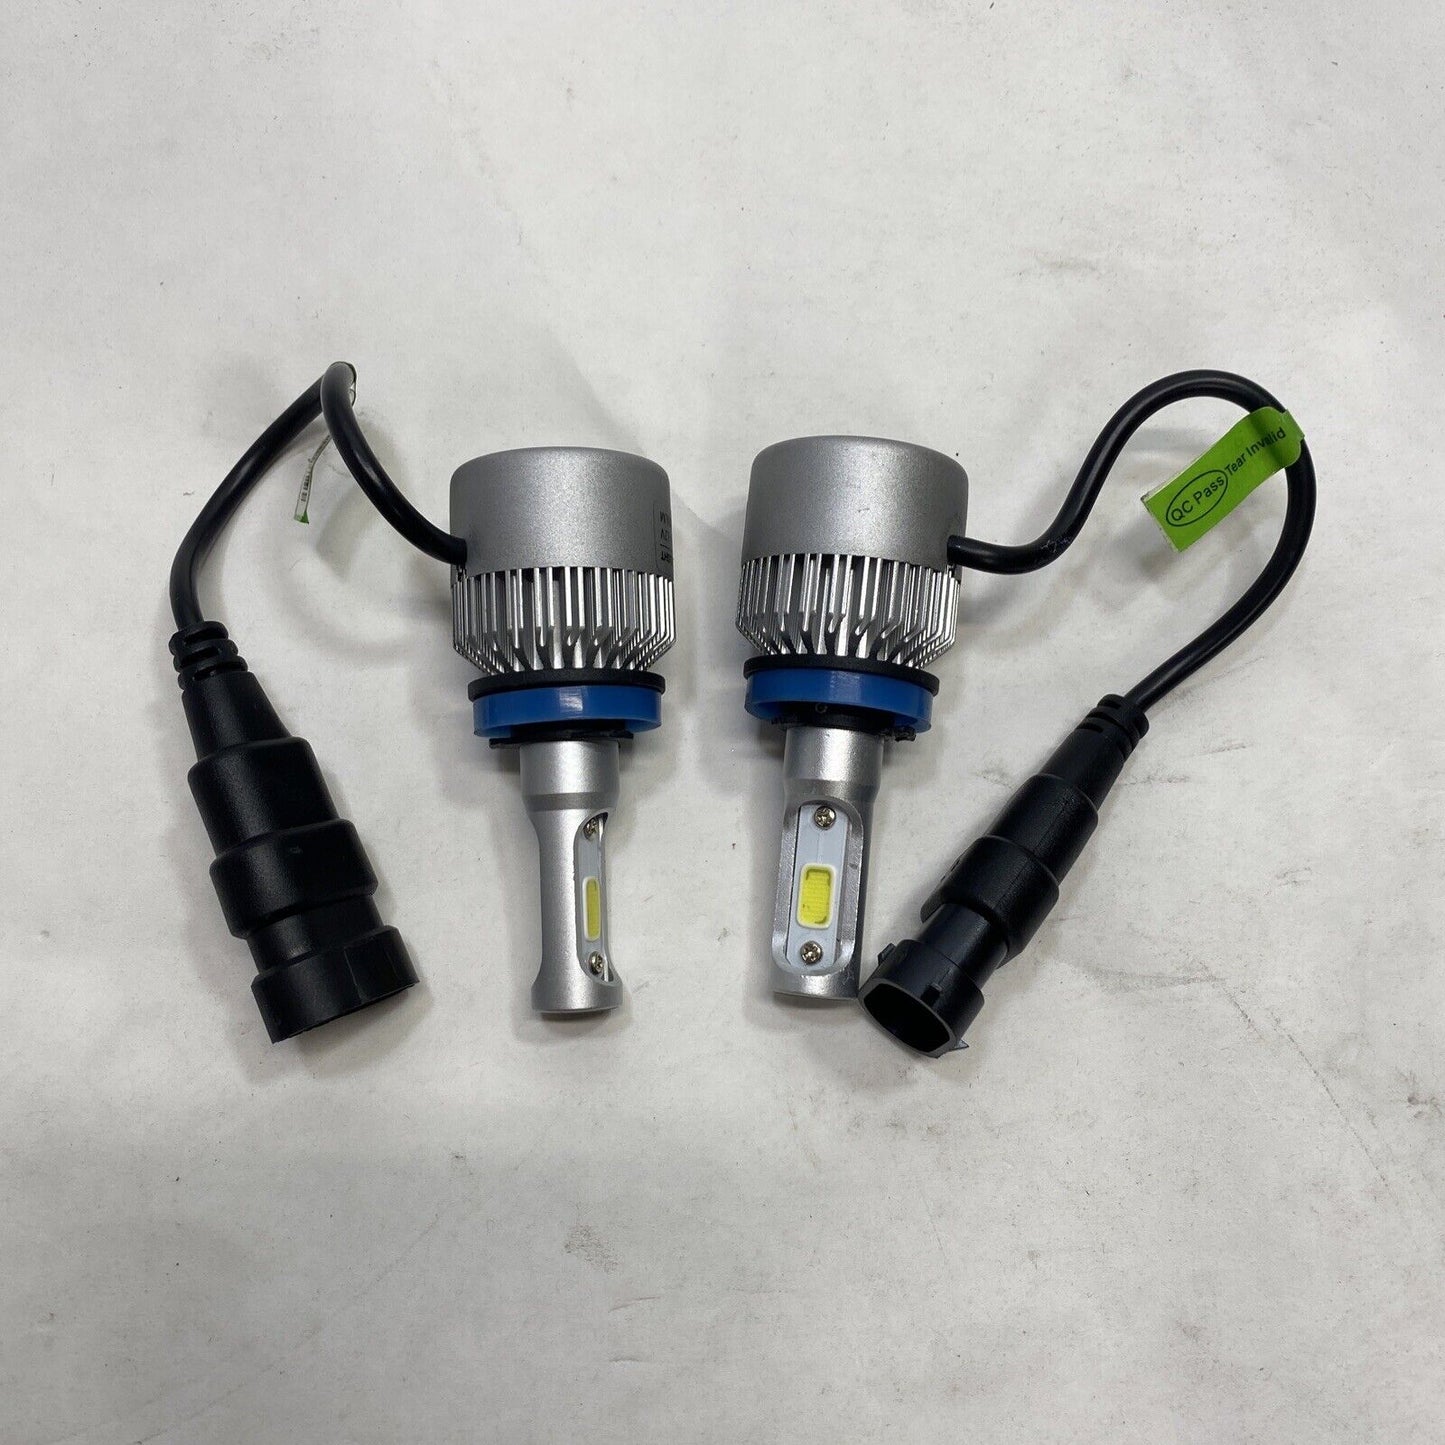 New LED H11 Headlight Bulb Pair